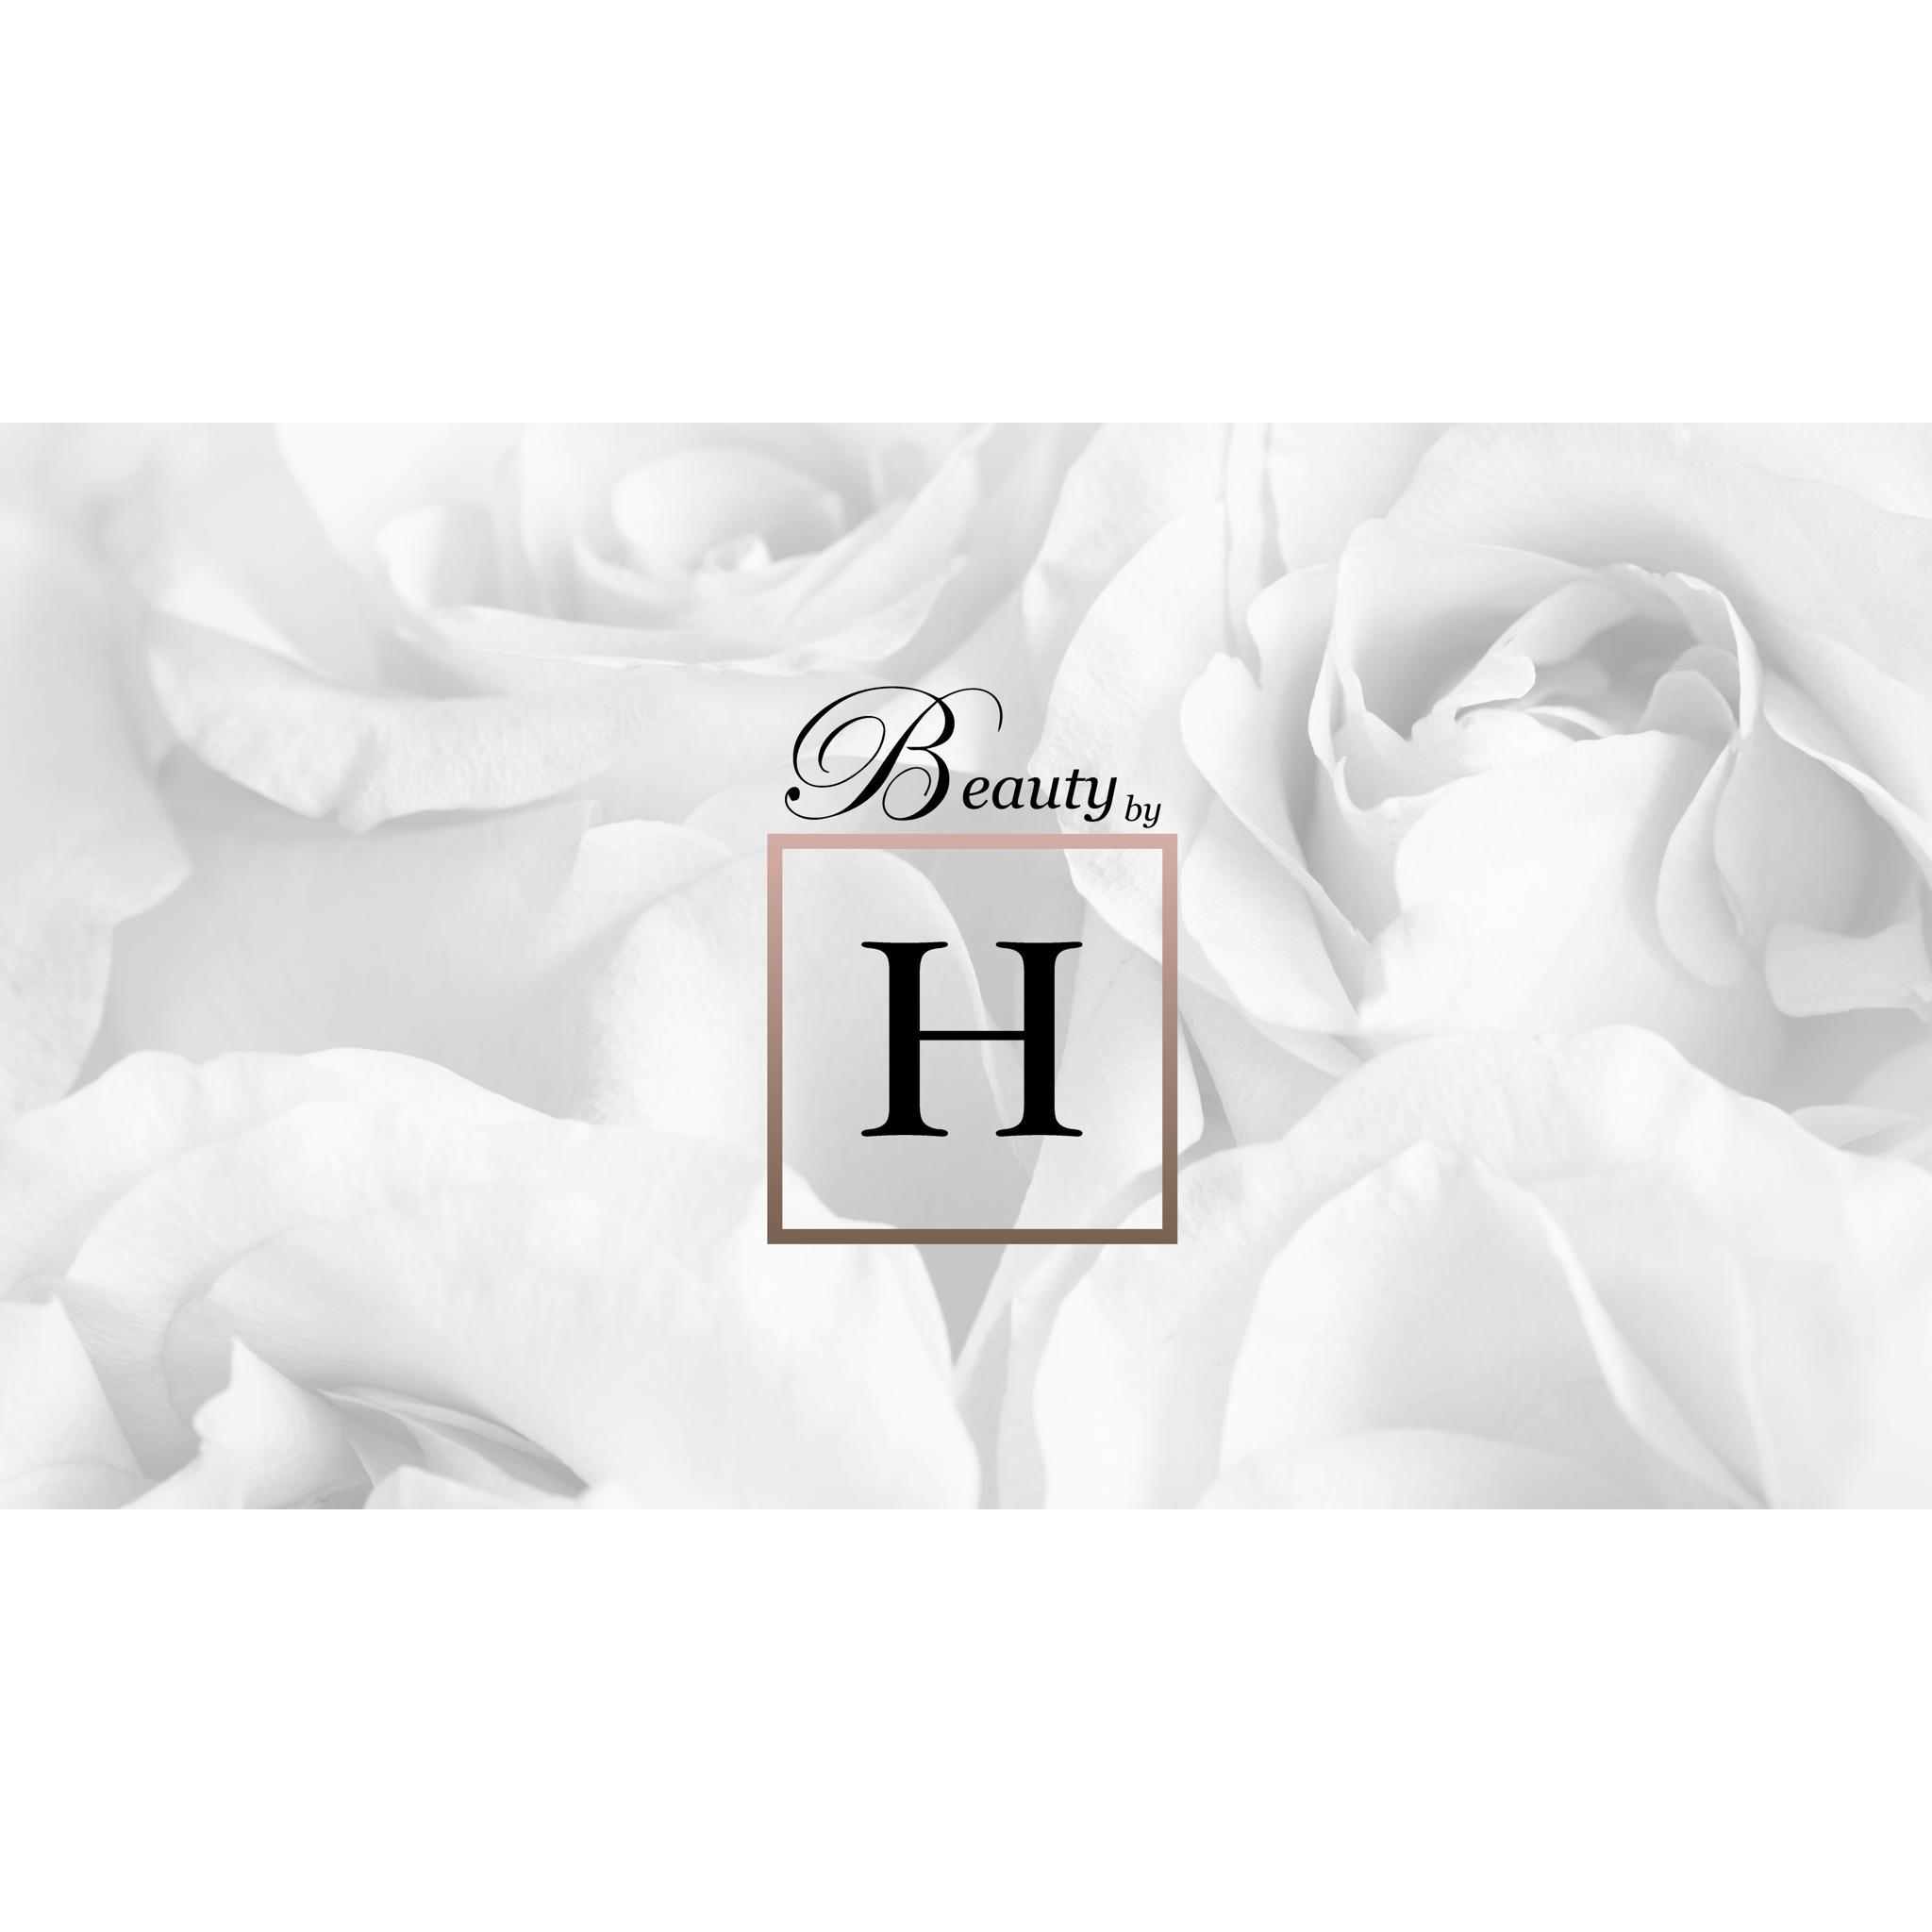 Beauty by H Logo